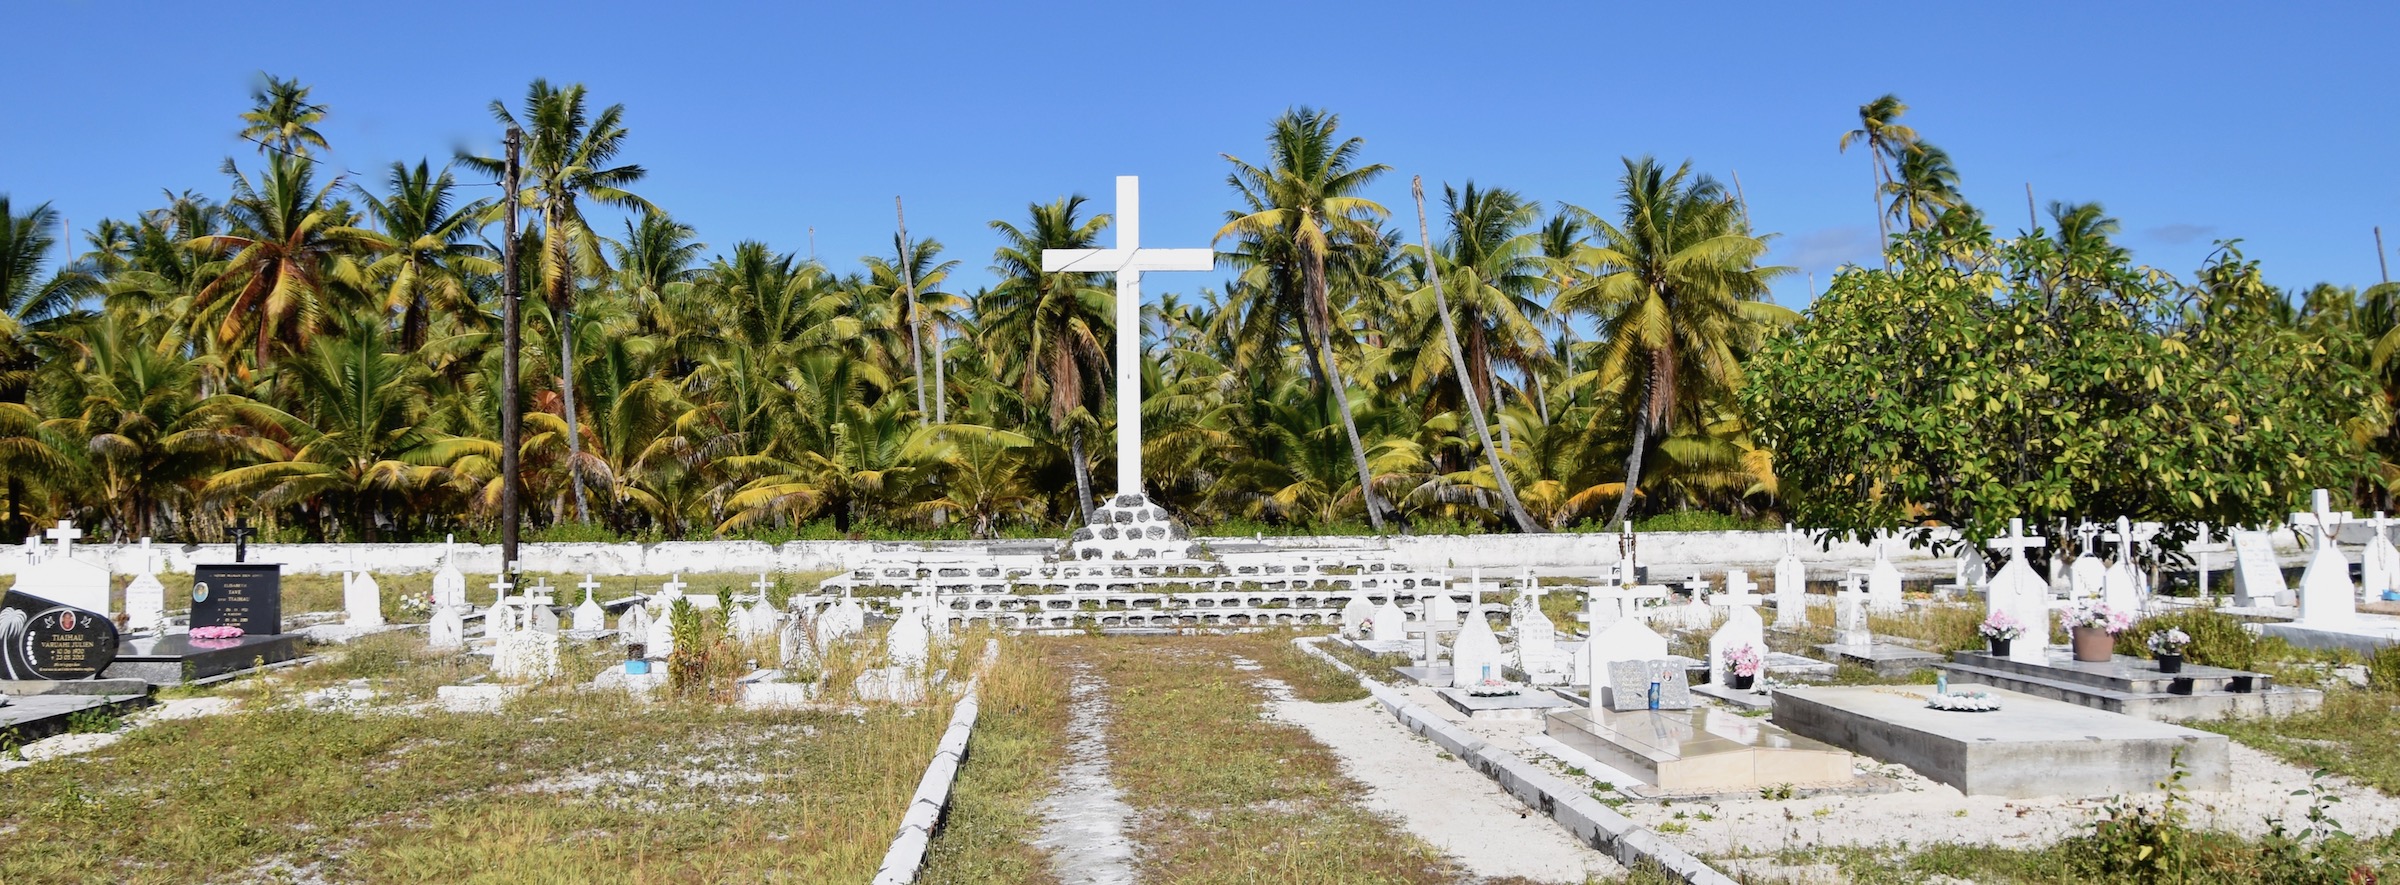 Cemetery on Kauehi